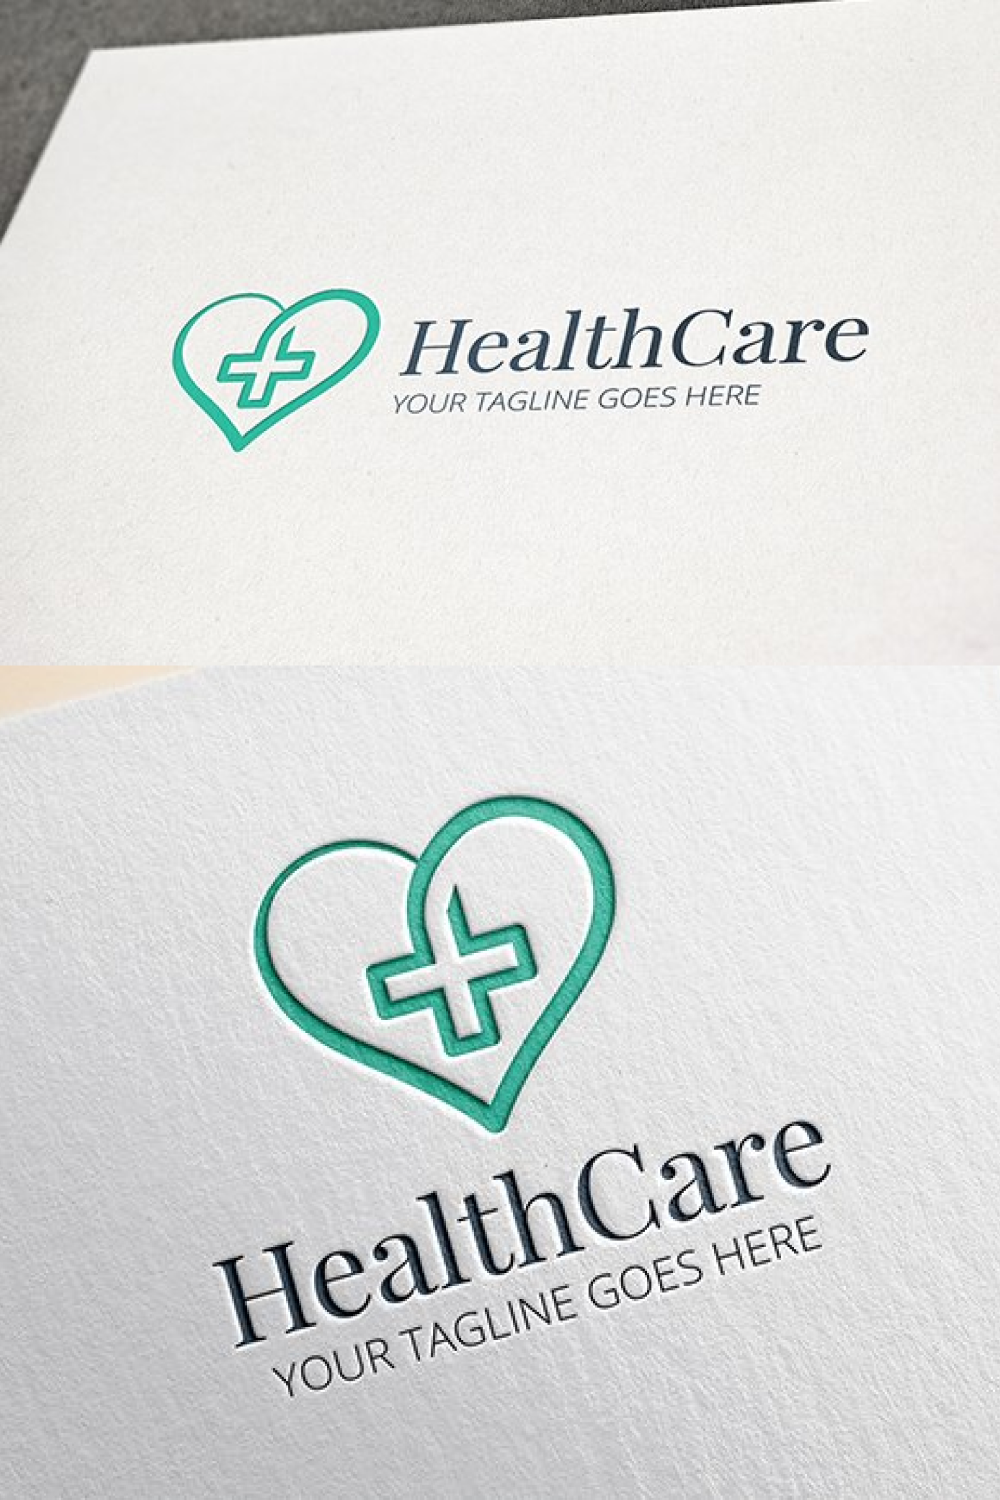 Health care logo.